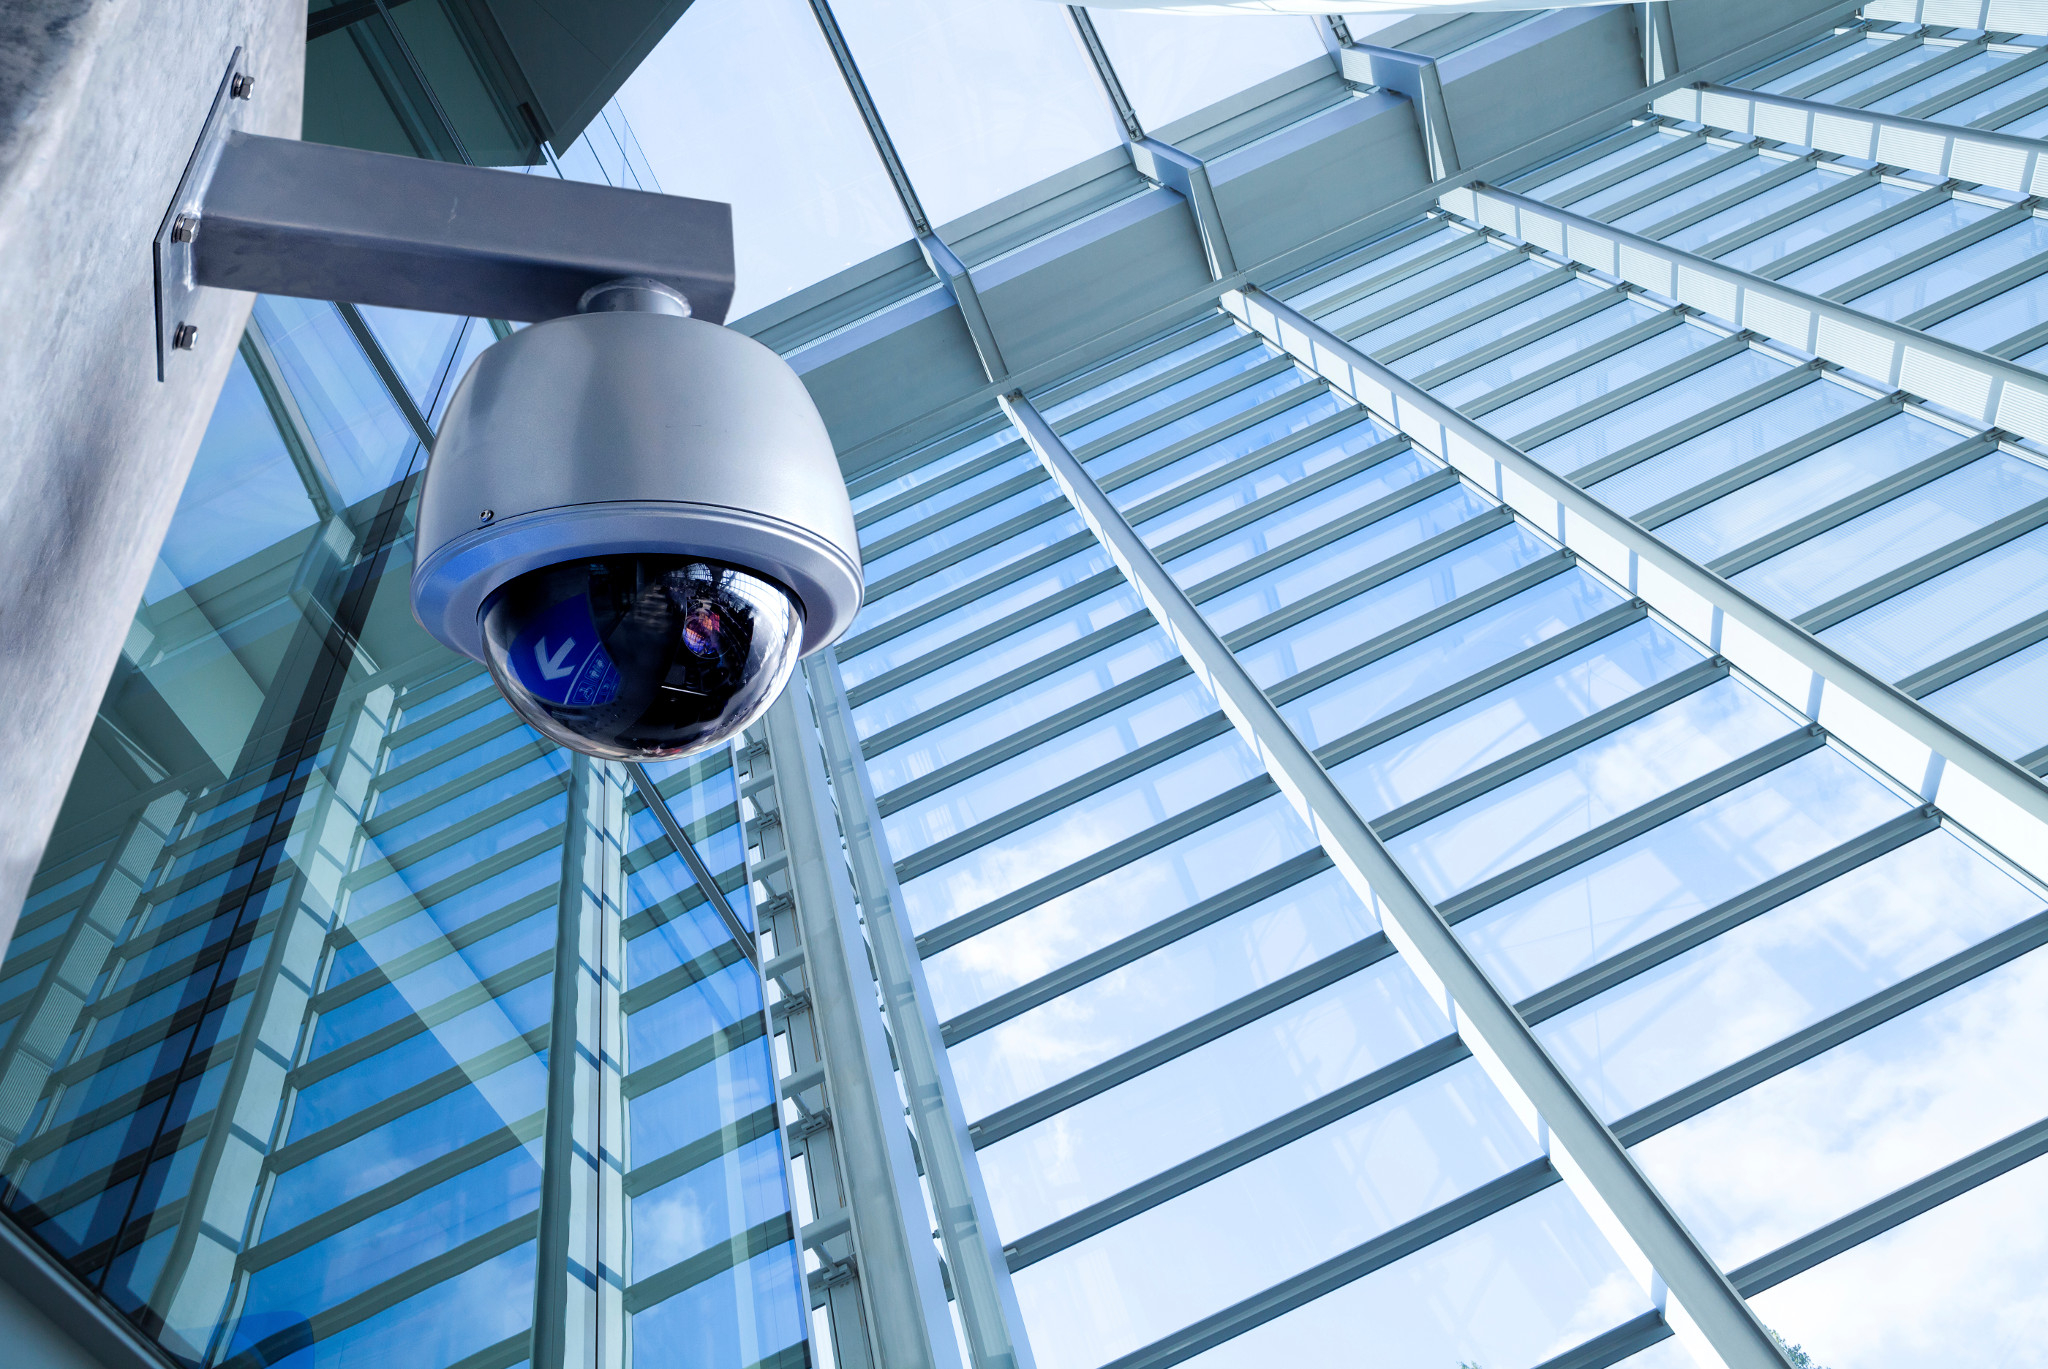 Keep the latest on home security systems. Системы видеонаблюдения (CCTV). Камера видеонаблюдения CCTV. Камеры видеонаблюдения на здании. Сиситемы безопасности.